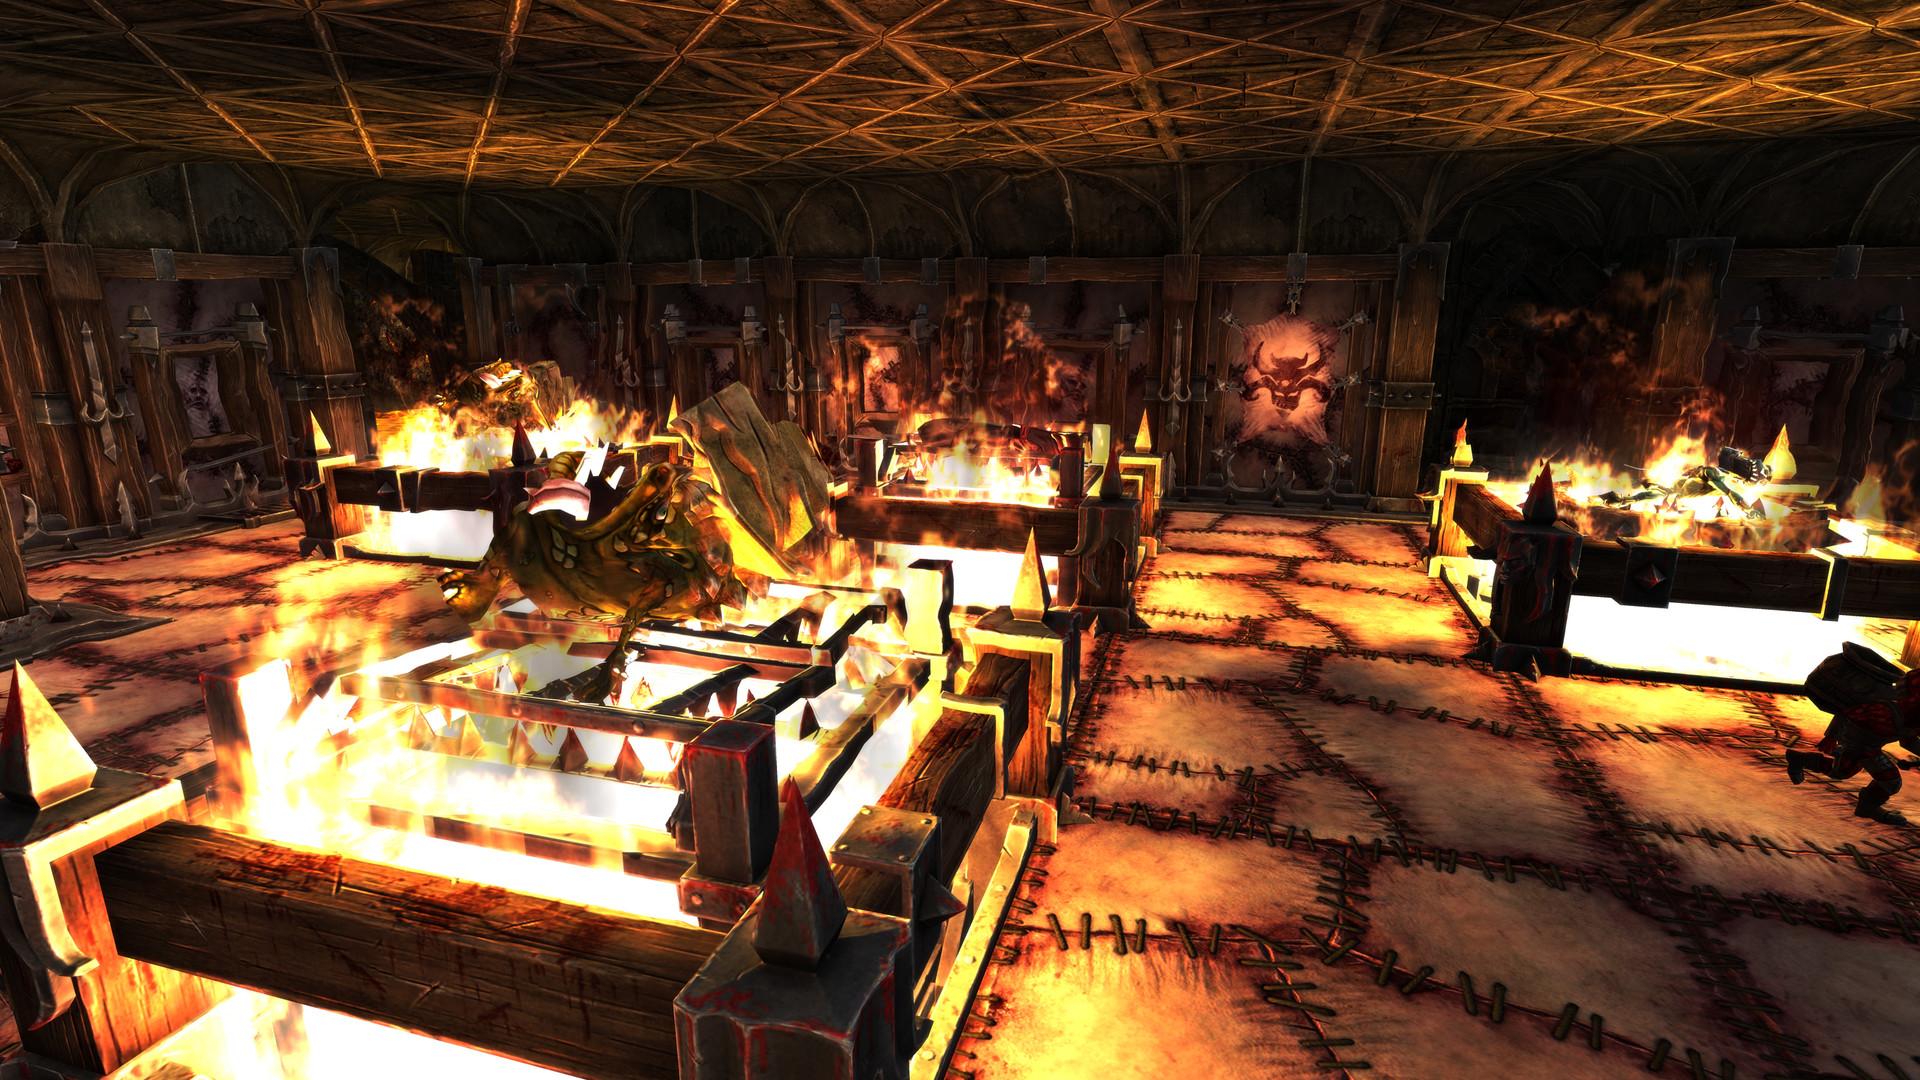 Screenshot №13 from game War for the Overworld